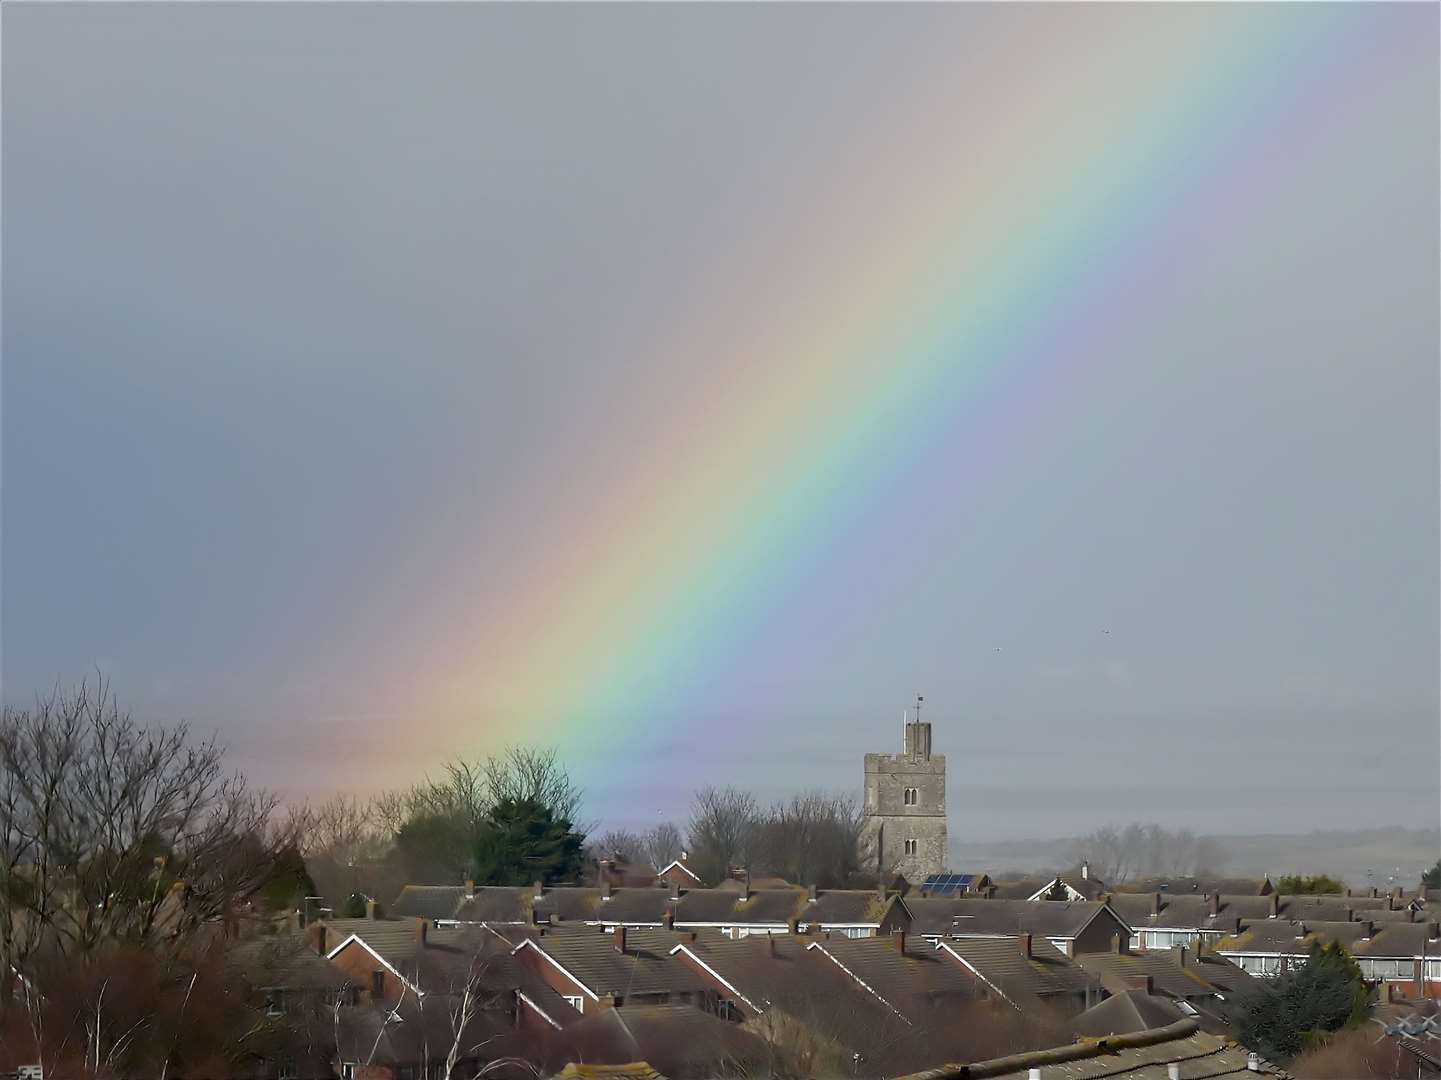 Rainbow over St Margaret's Church Rainham. Picture by: Simon Pordage